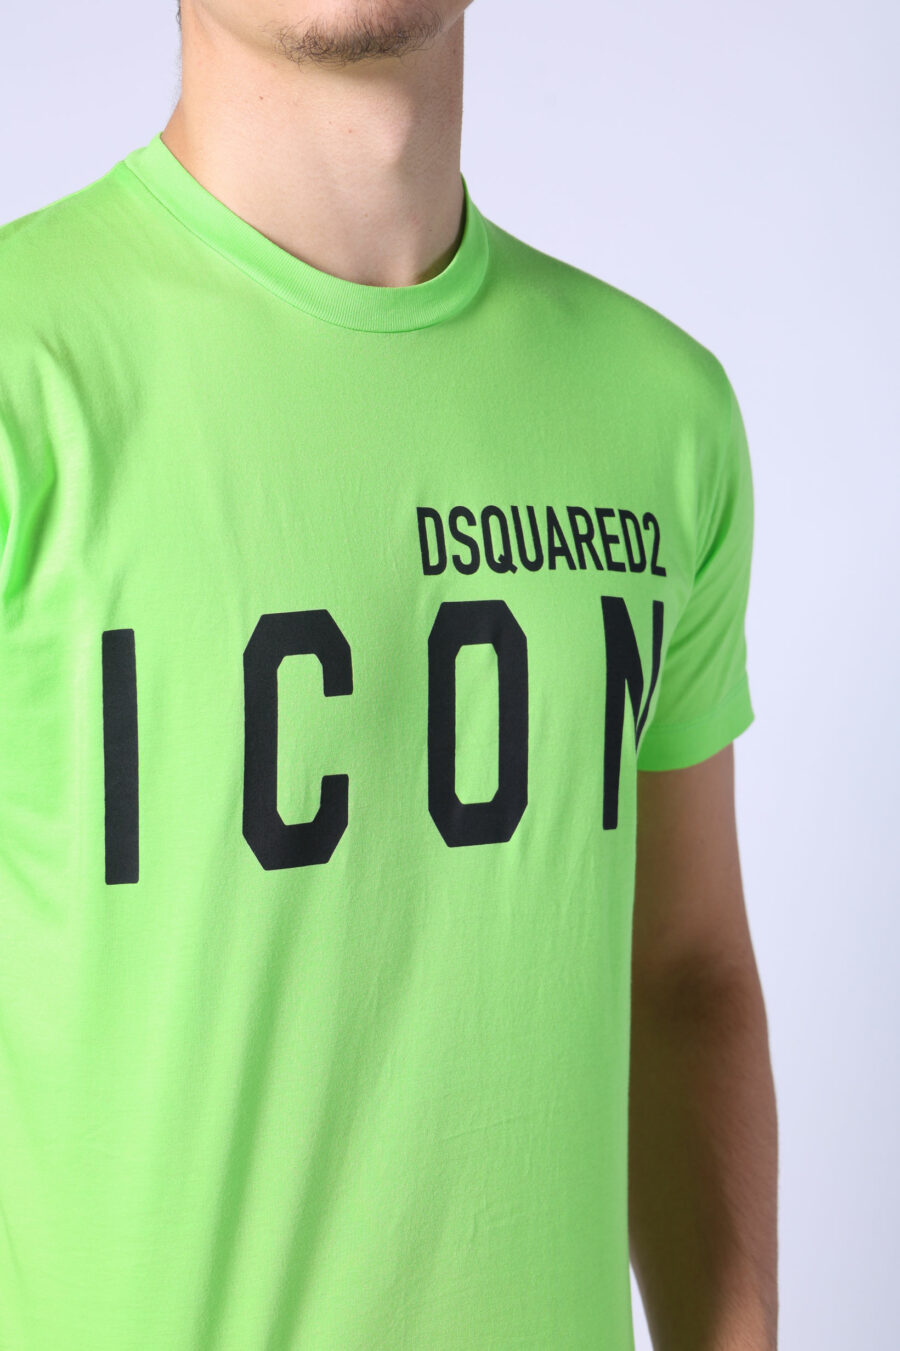 T-shirt verde lima com maxilogo "icon" preto - Untitled Catalog 05396